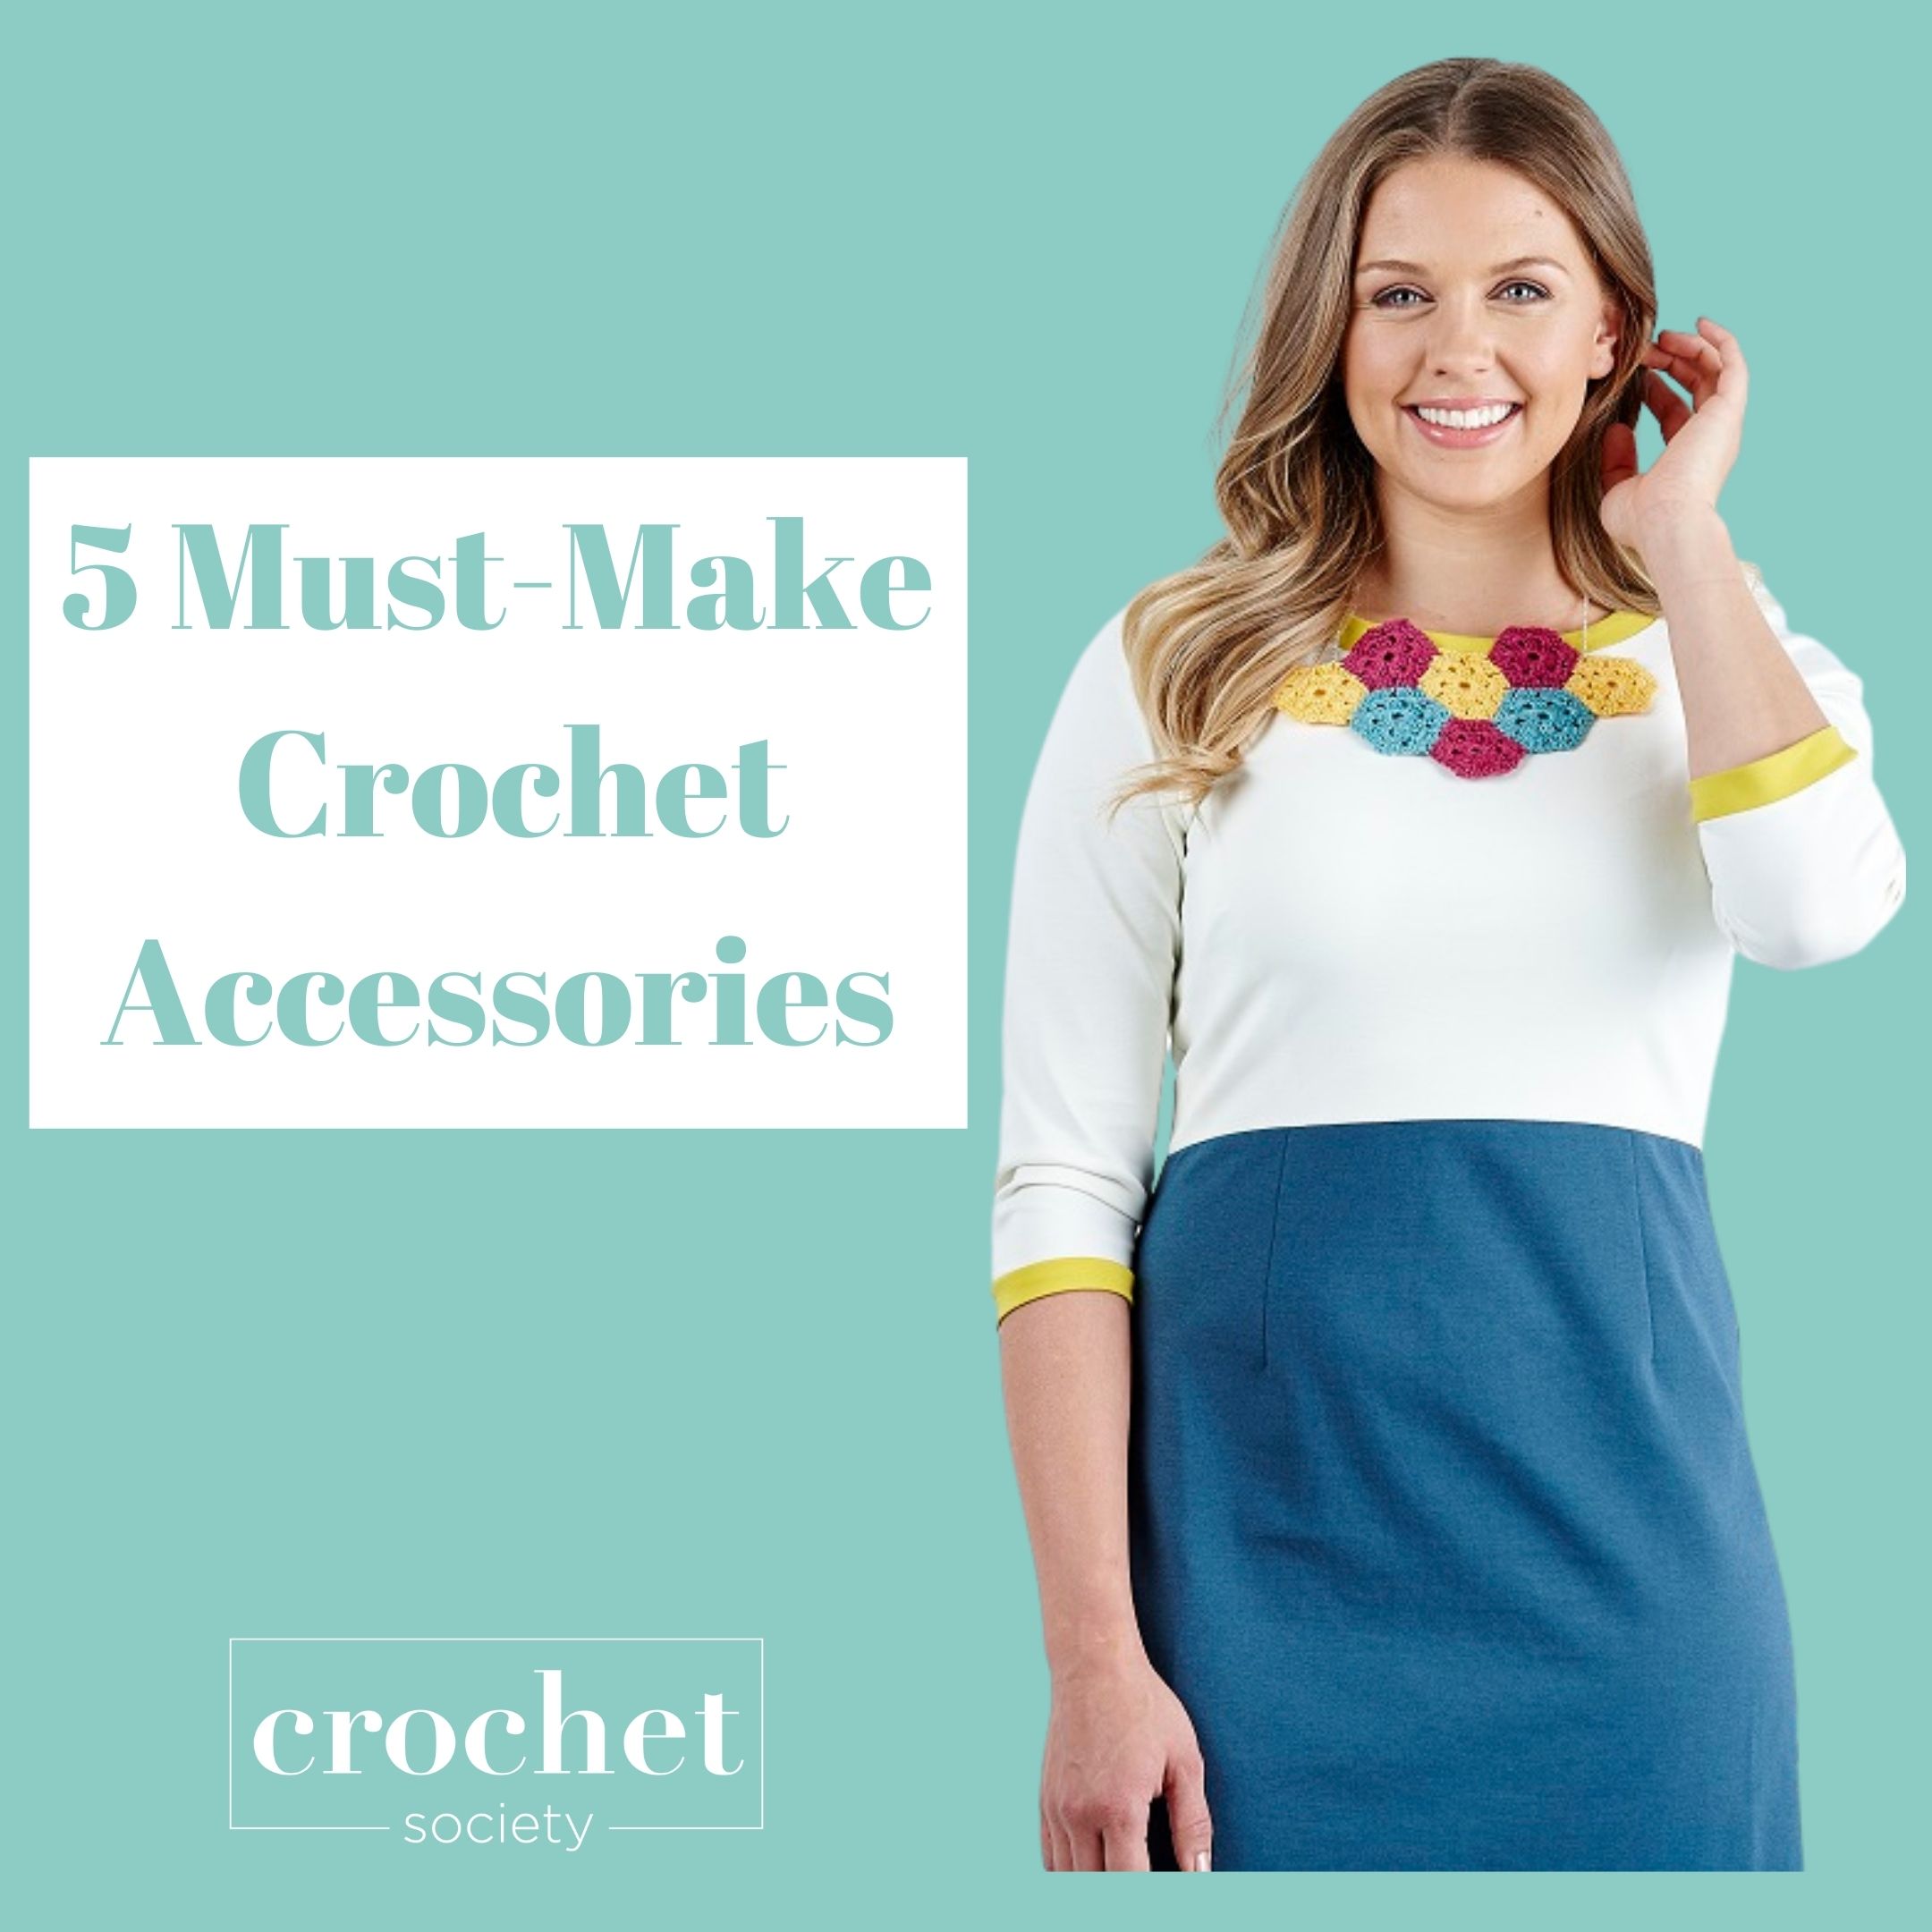 5 must make crochet accessories